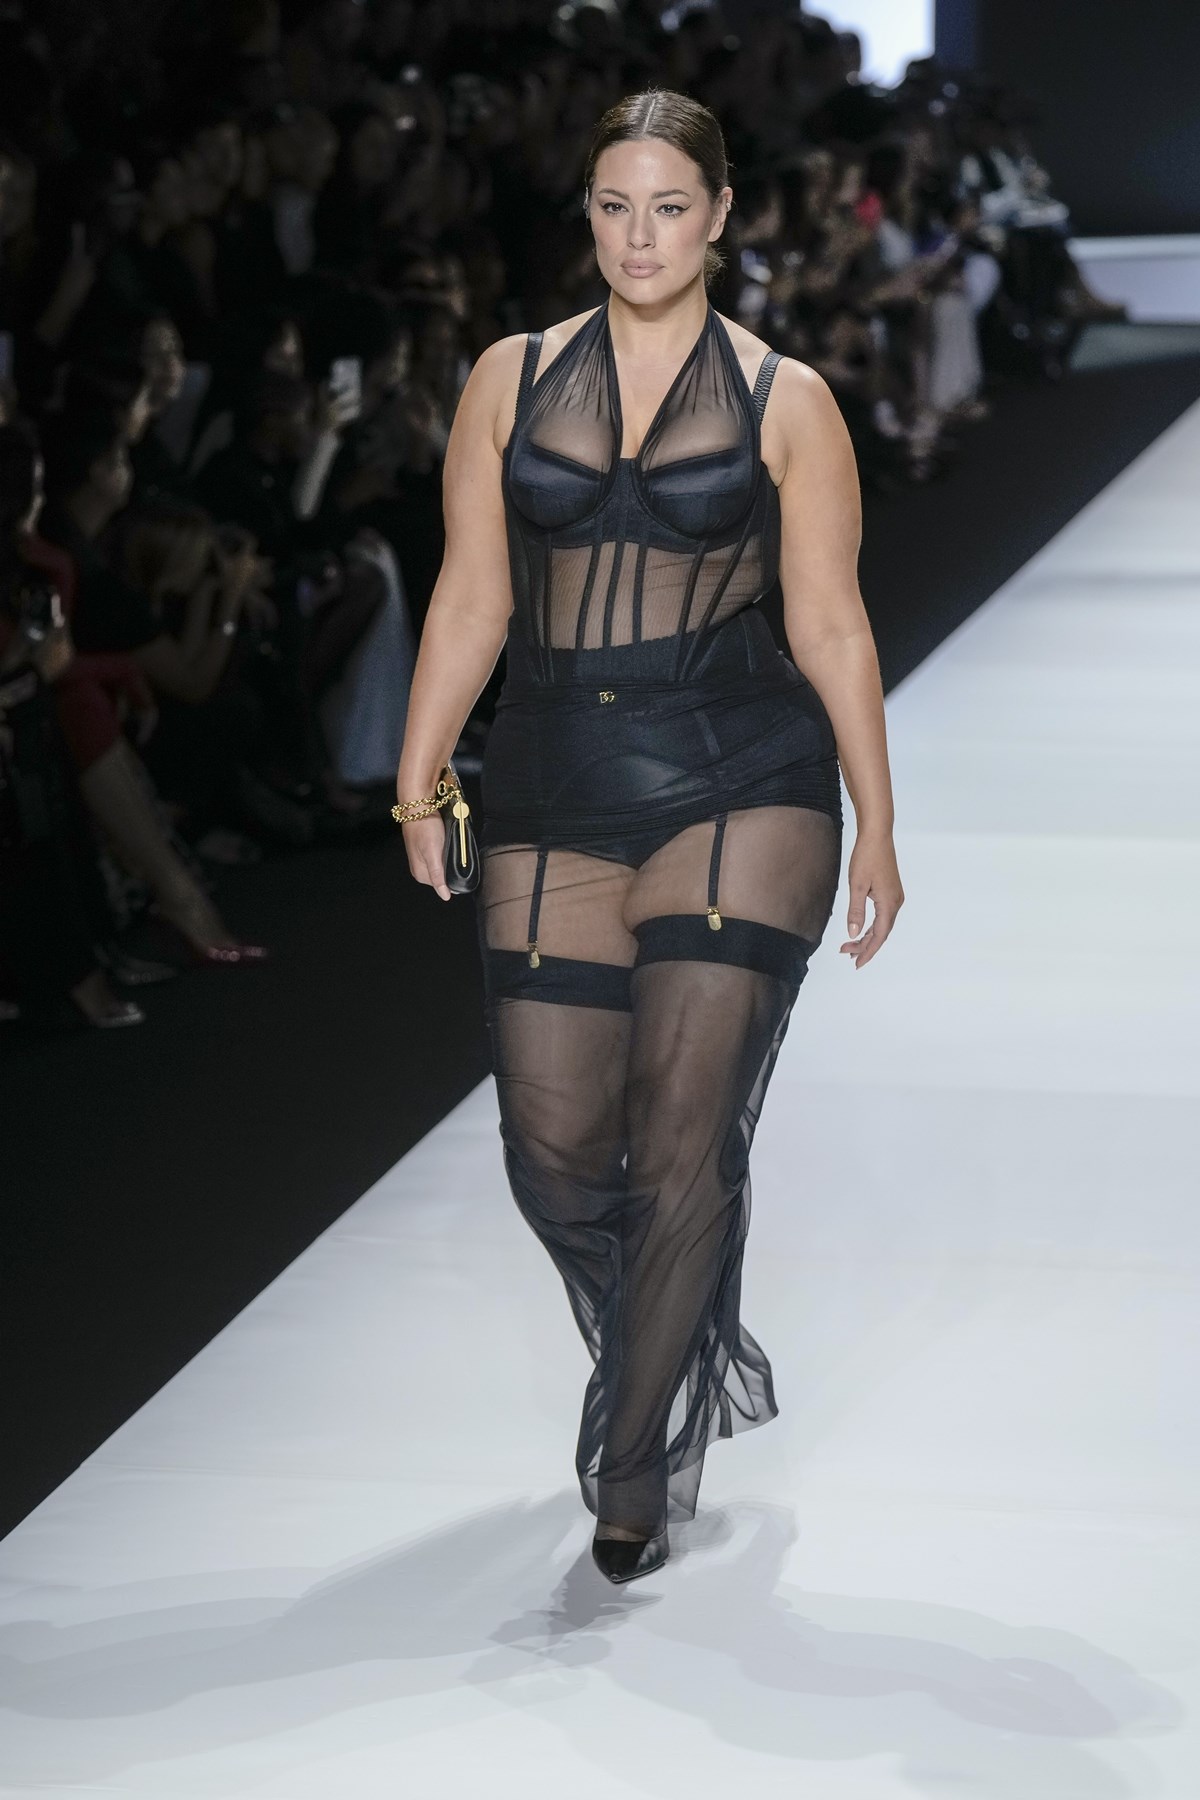 Naomi Campbell's best runway looks proving she is the OG supermodel